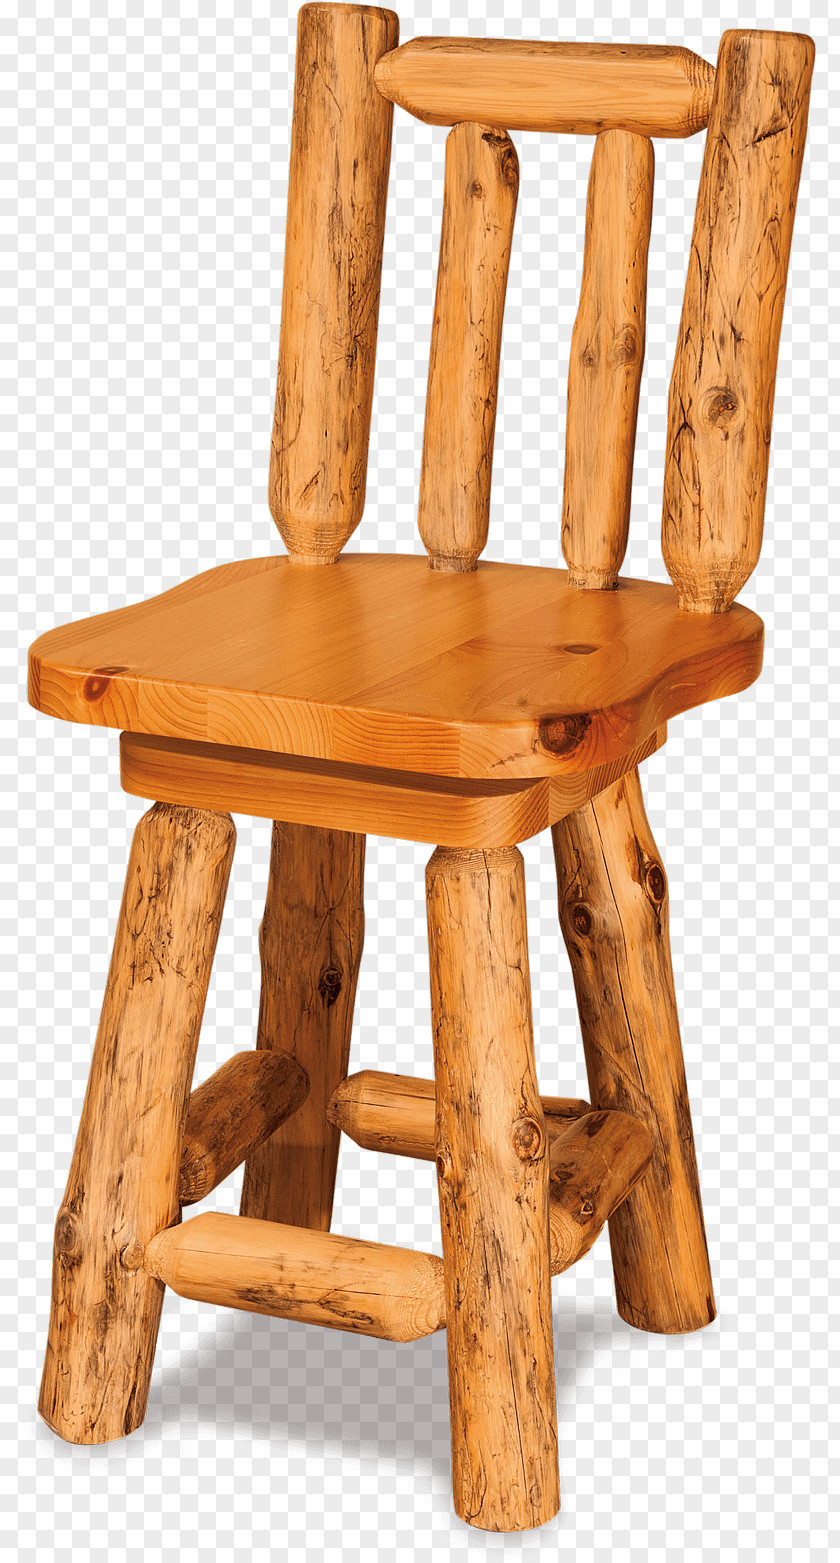 Bar Stool Rustic Furniture Chair PNG stool furniture Chair, chair clipart PNG